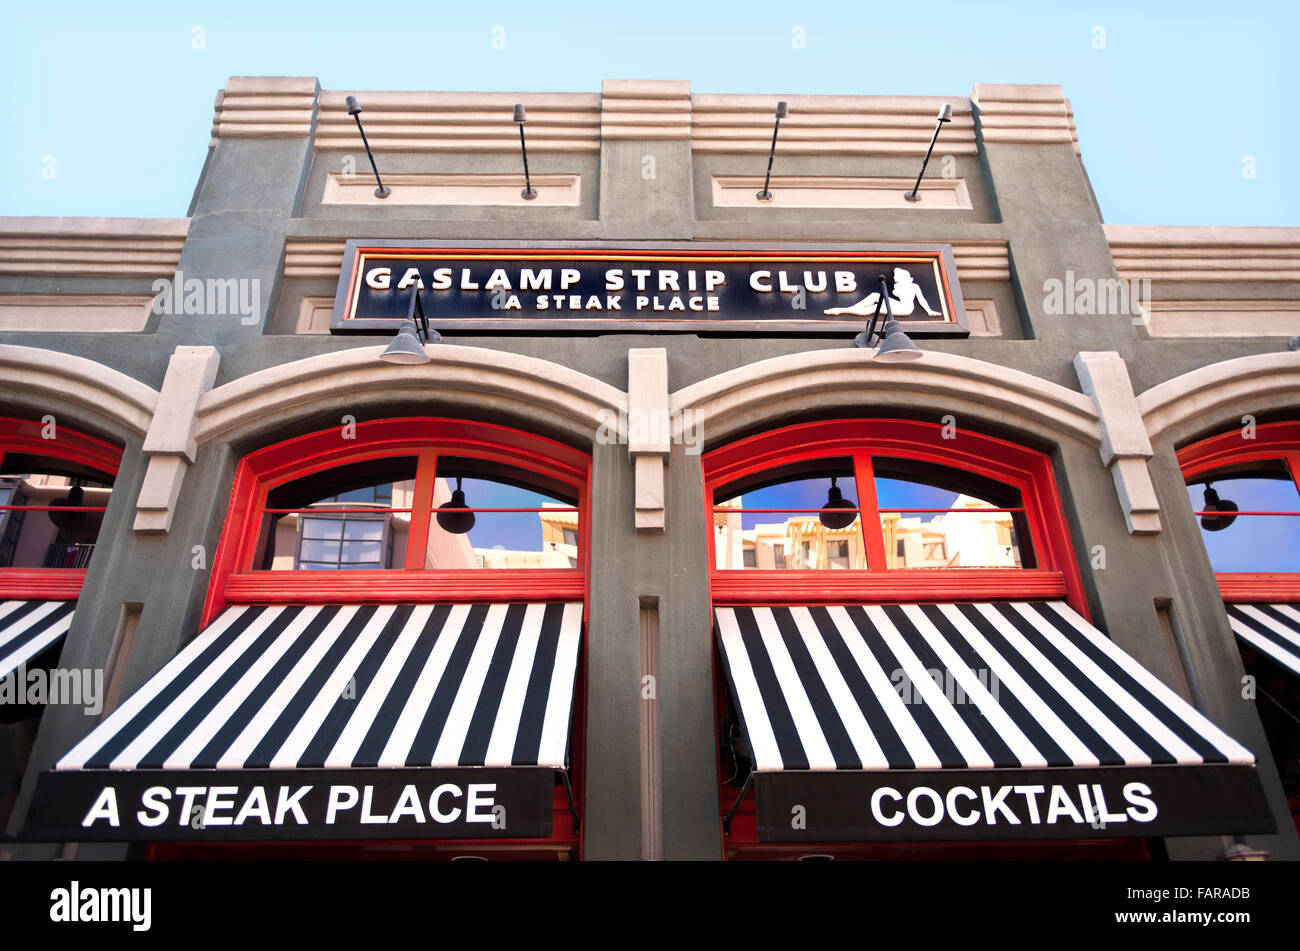 Le Gaslamp Strip Club, Restaurant, Steak House à San Diego, Californie Banque D'Images